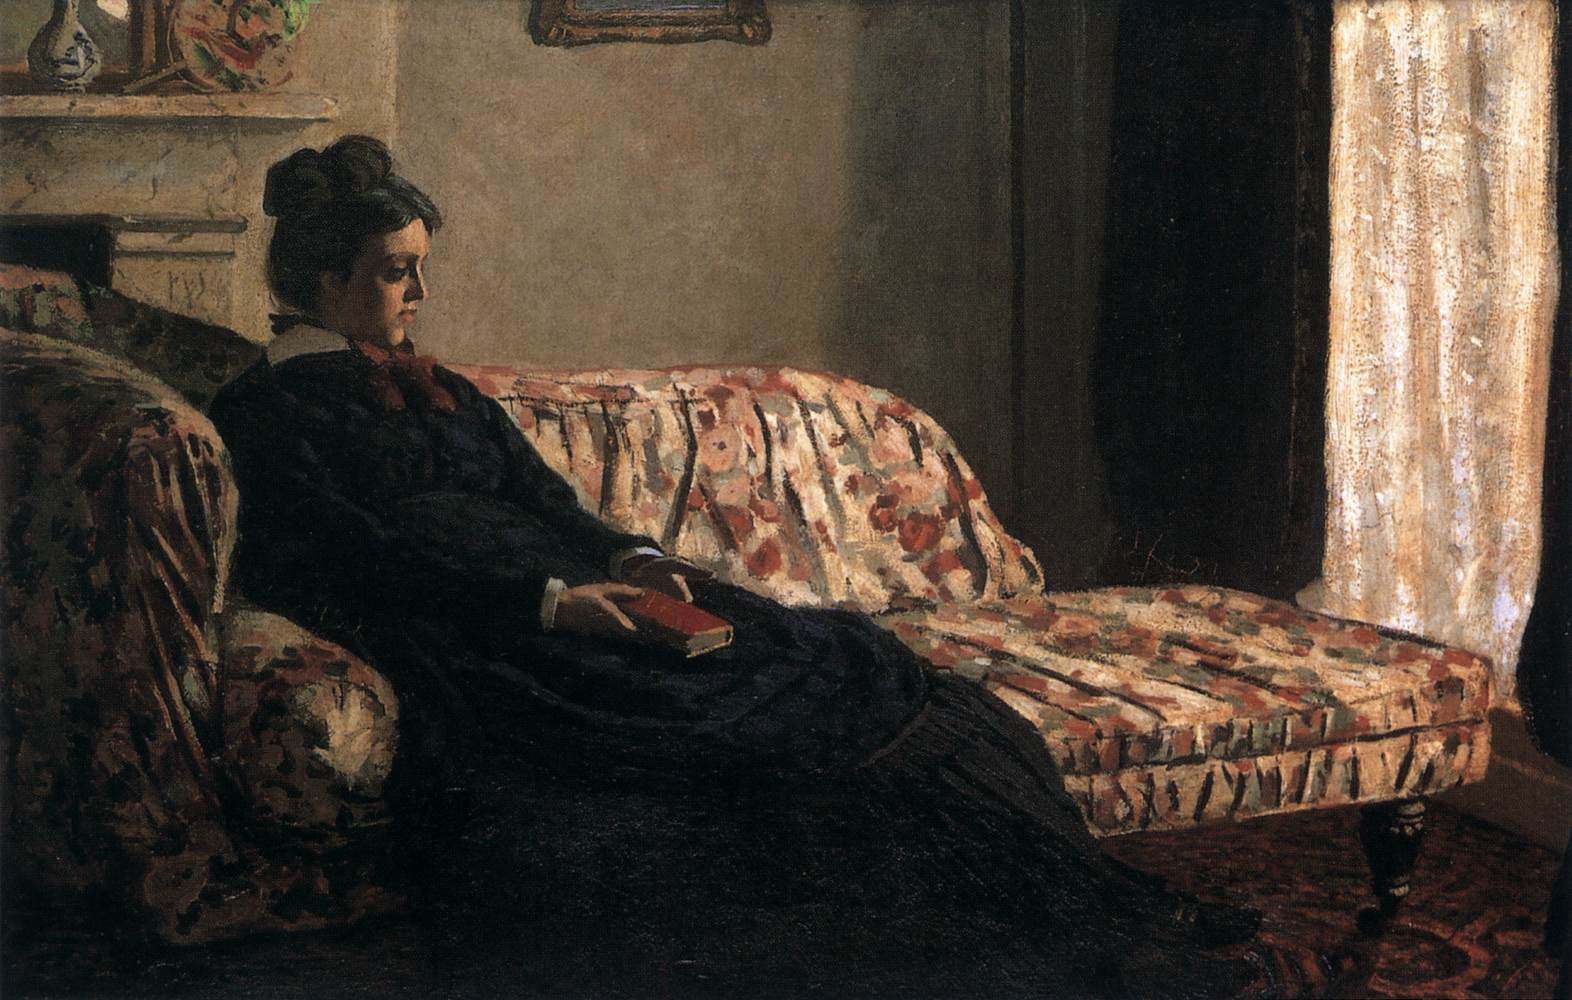 Claude+Monet-1840-1926 (171).jpg